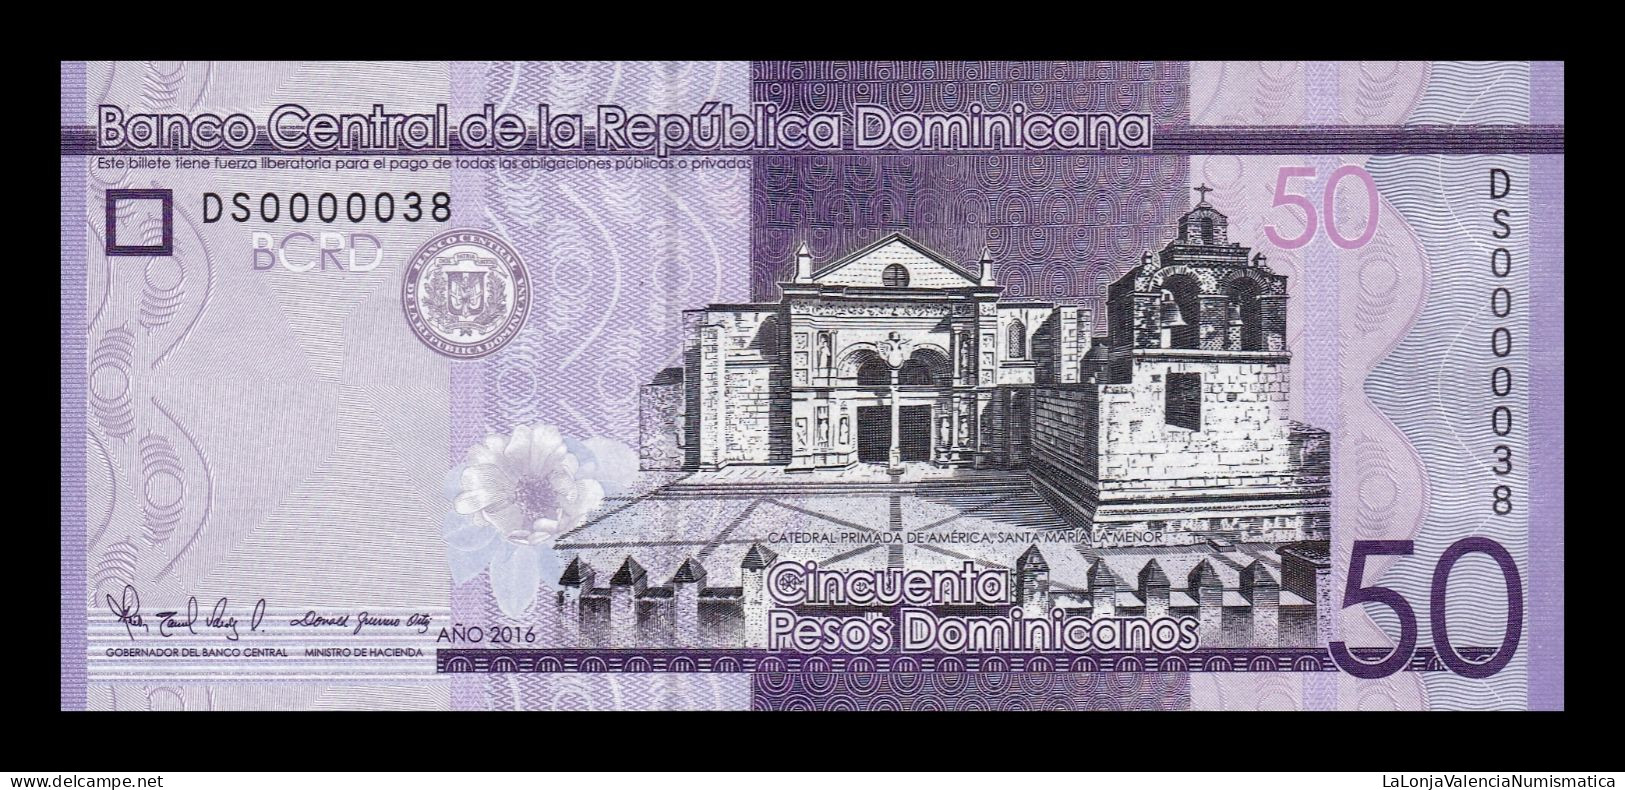 República Dominicana 50 Pesos Dominicanos 2016 Pick 189c Low Serial 38 Sc Unc - Dominicana